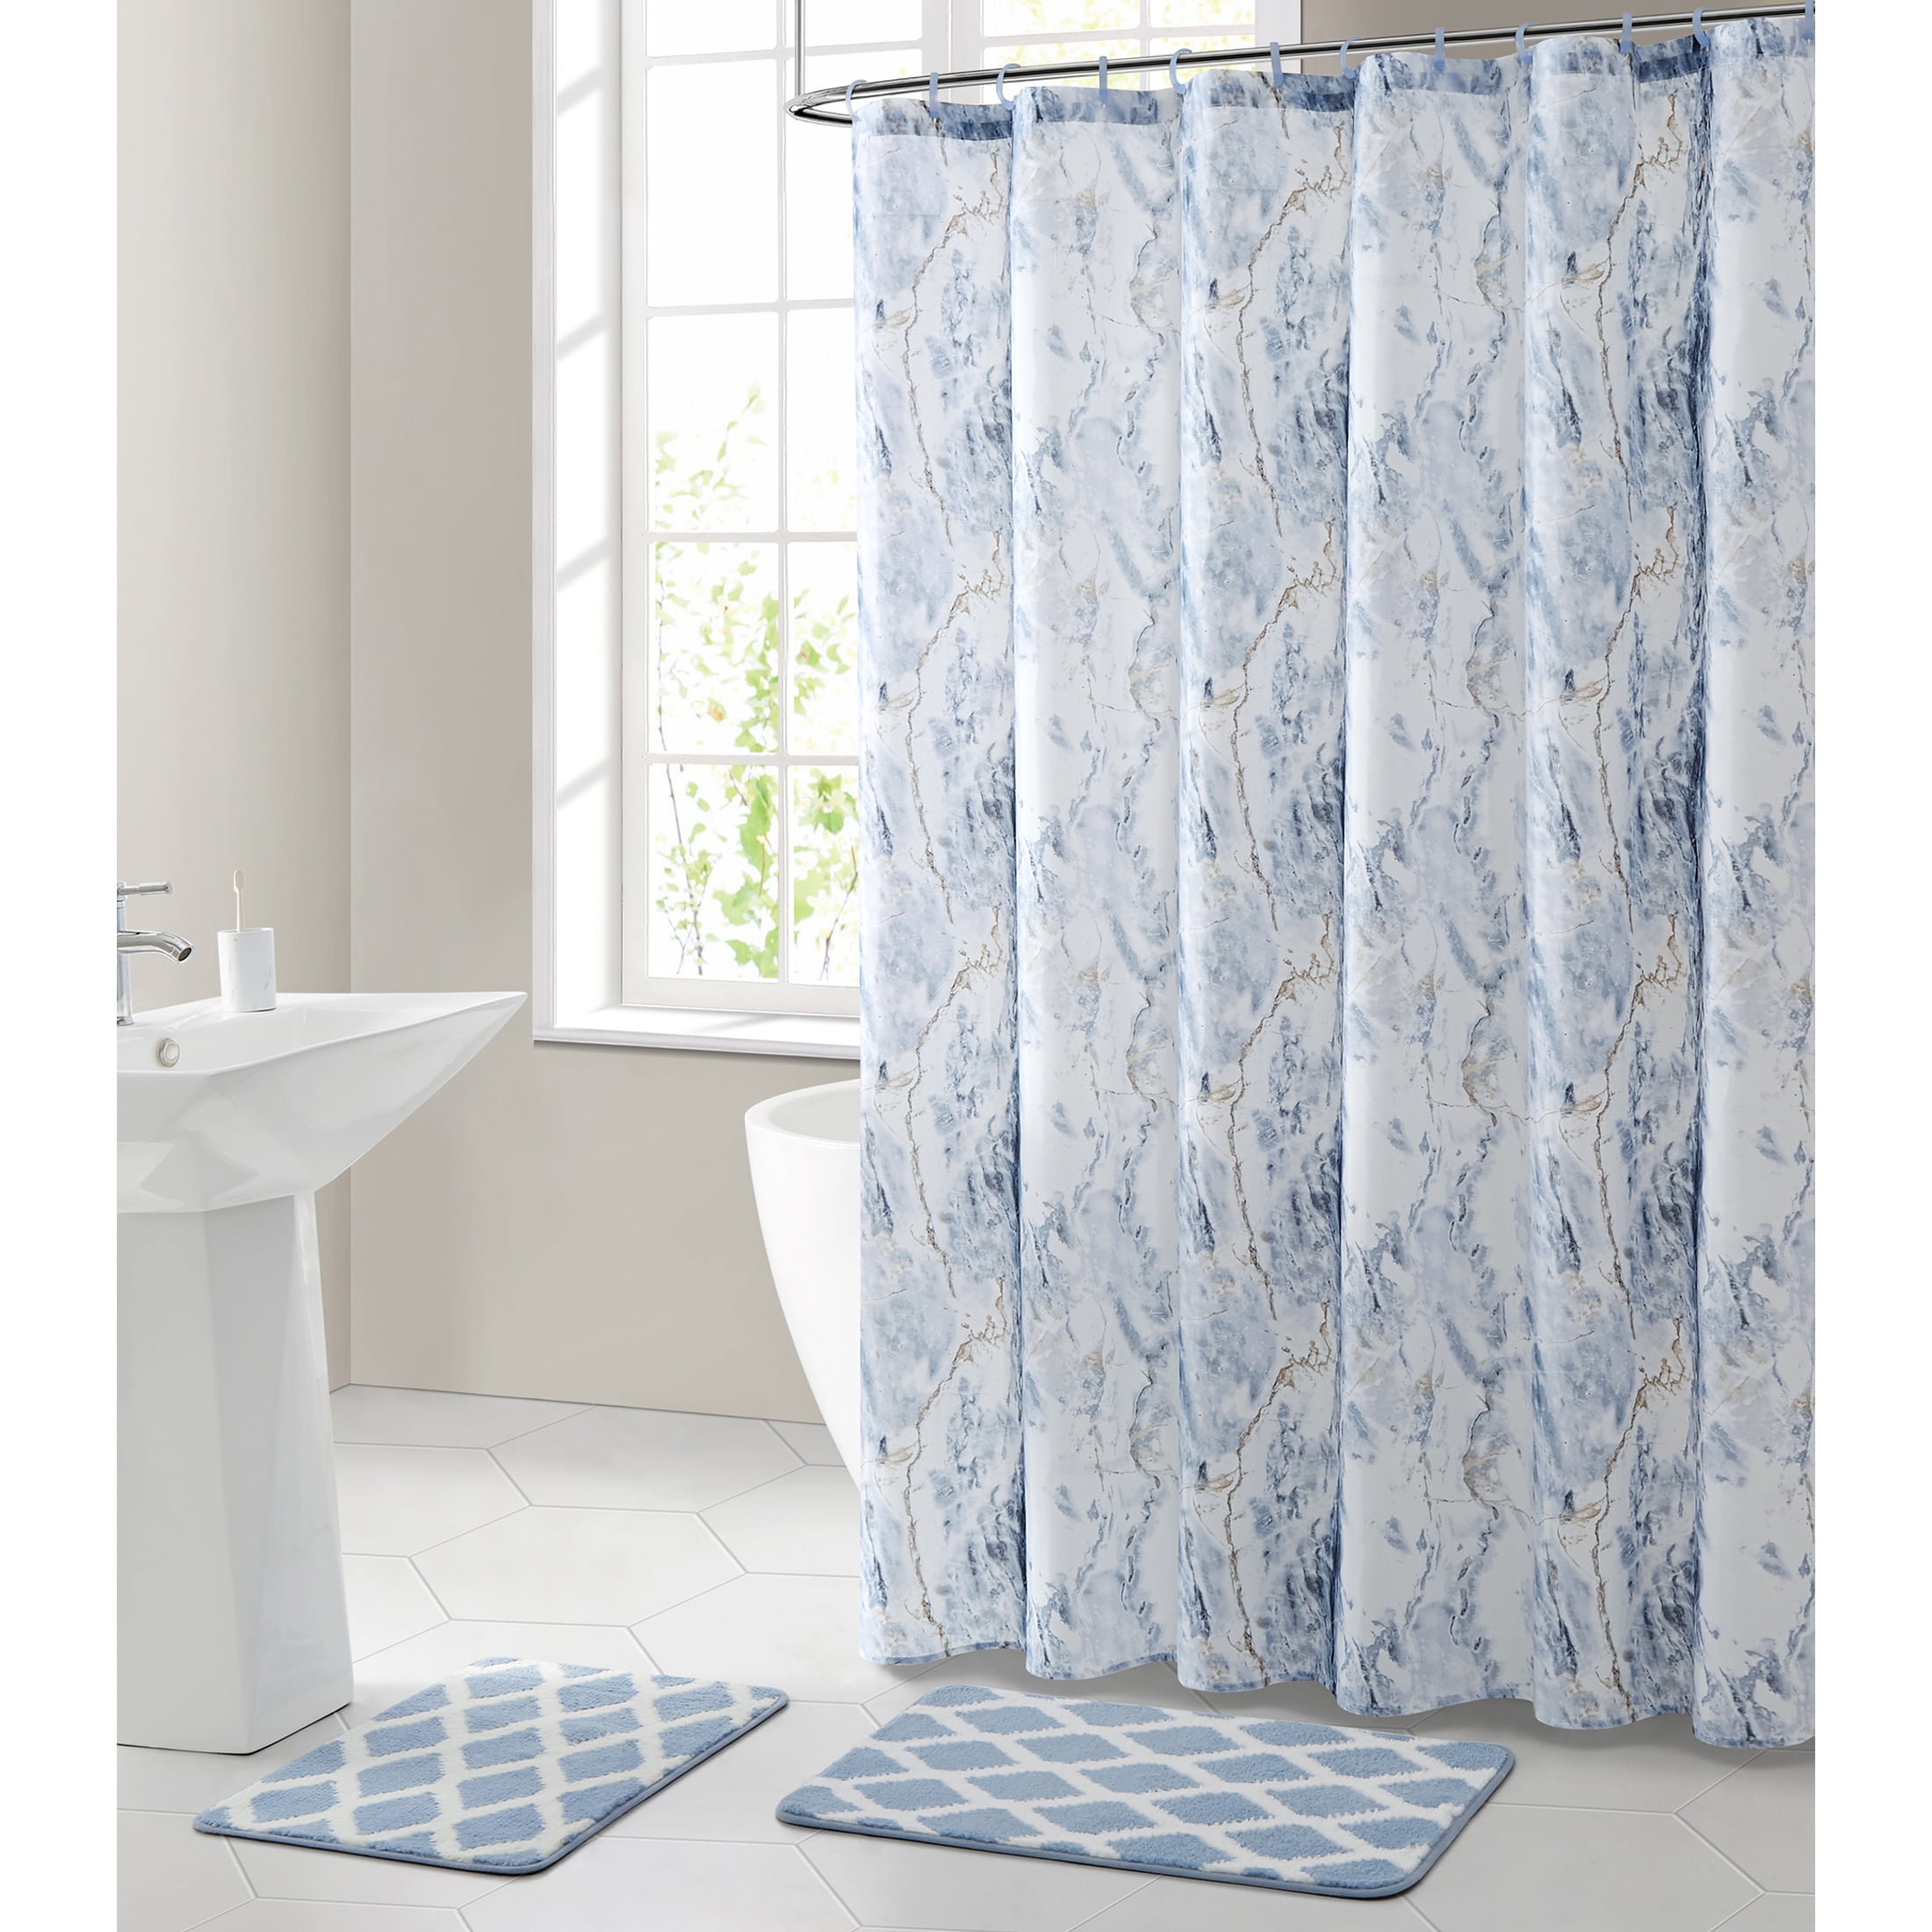 16 Color Cat Pop Art Shower Curtain Bath Mat Toilet Cover Rug Bathroom Decor Set 